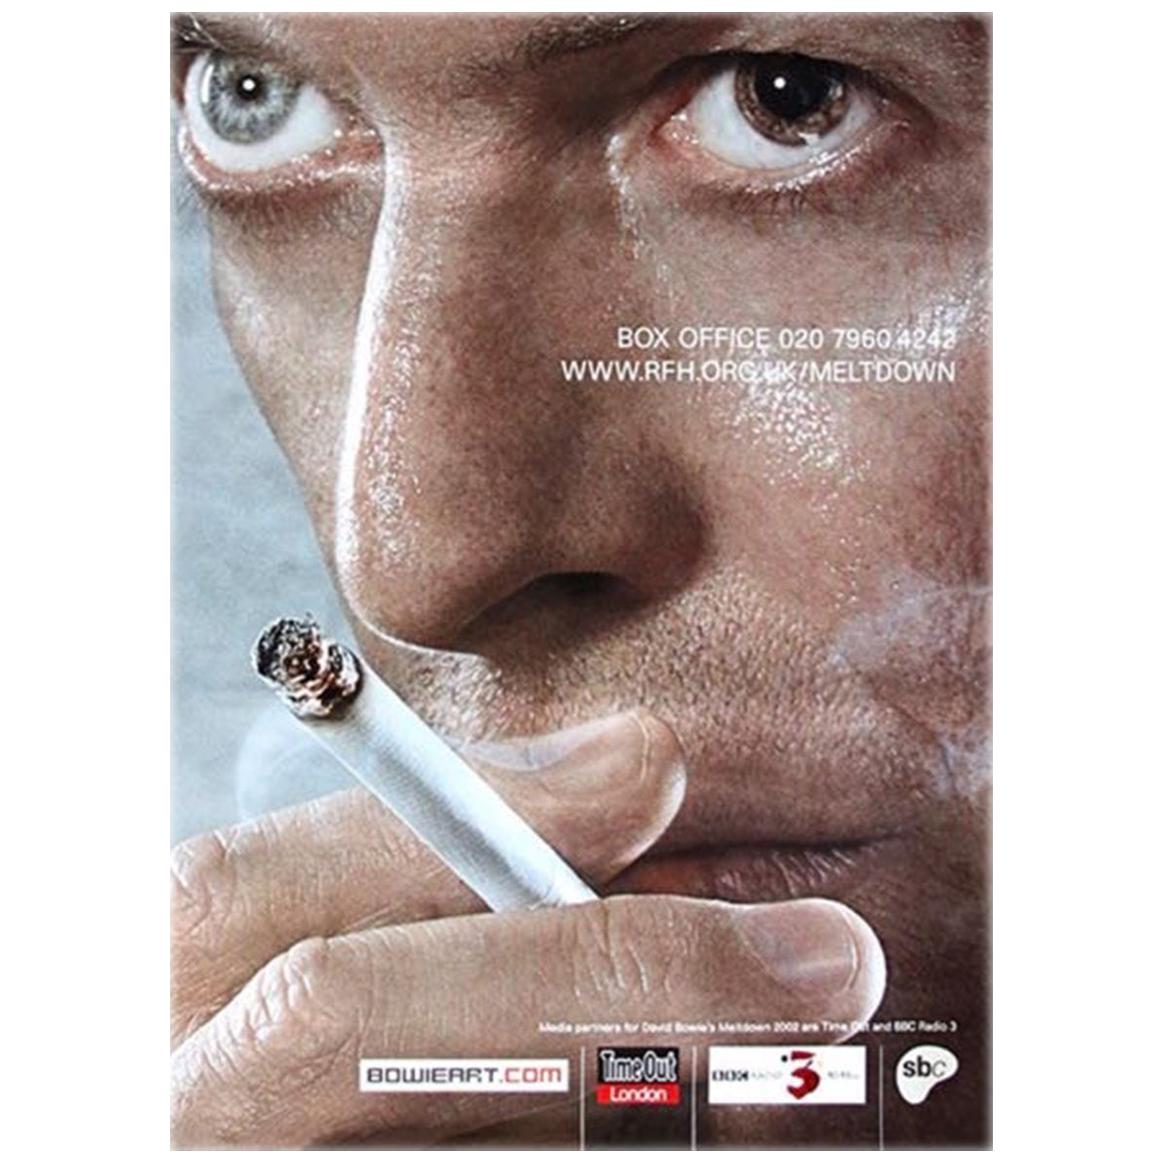 Original "Adshel" Poster for David Bowie Meltdown Tour, 2002 For Sale